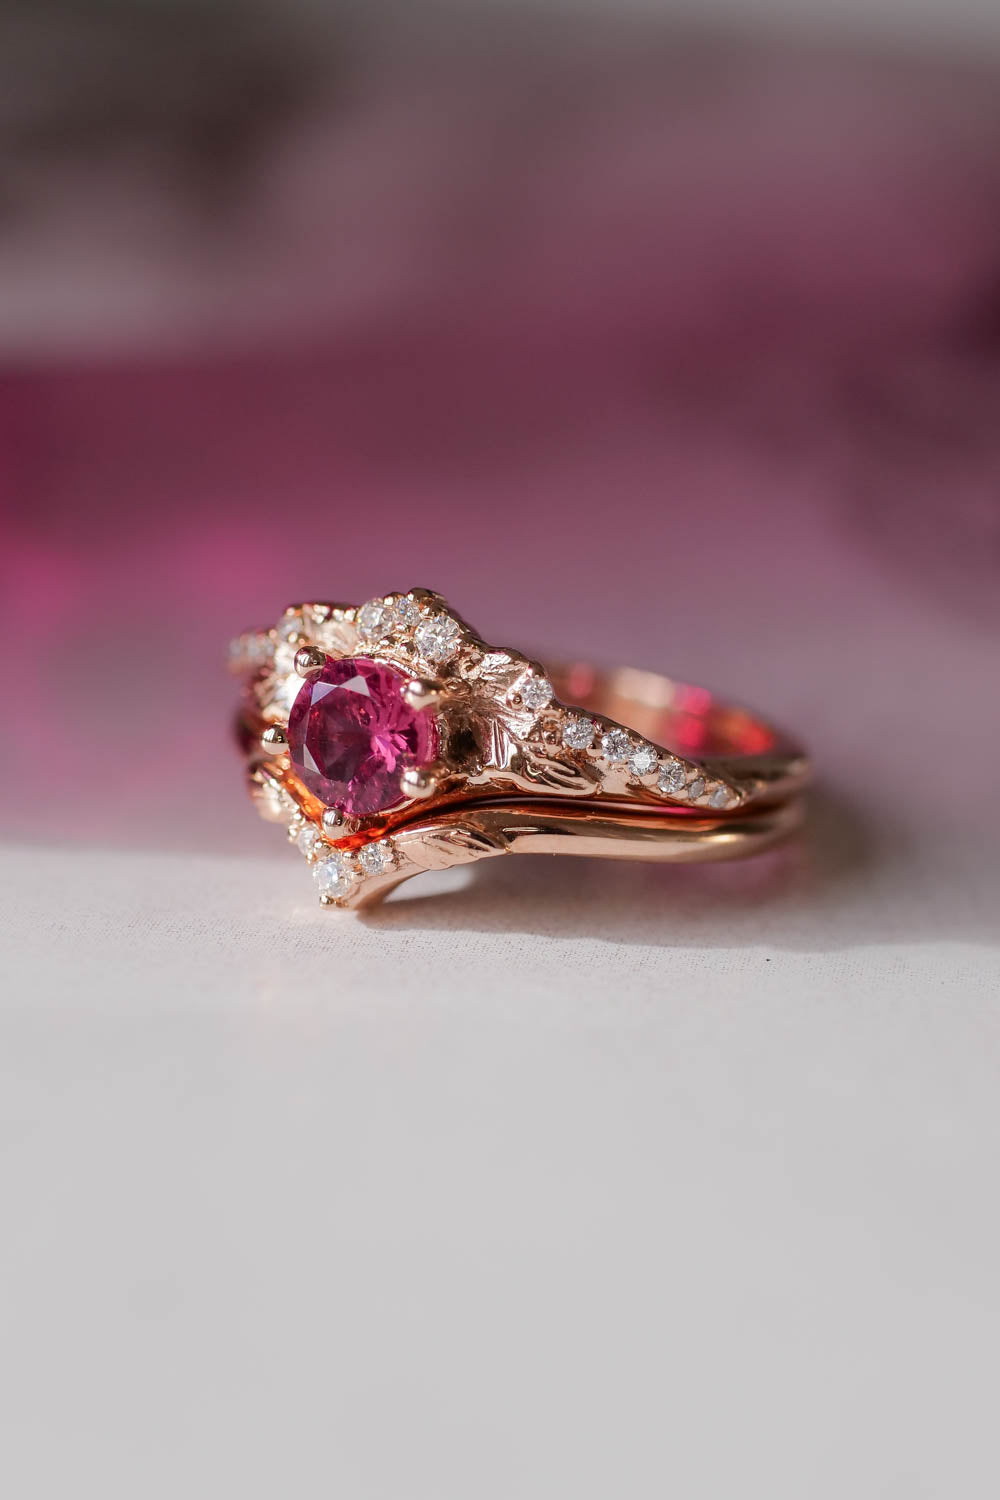 Pink tourmaline & diamonds bridal ring set / Amelia - Eden Garden Jewelry™